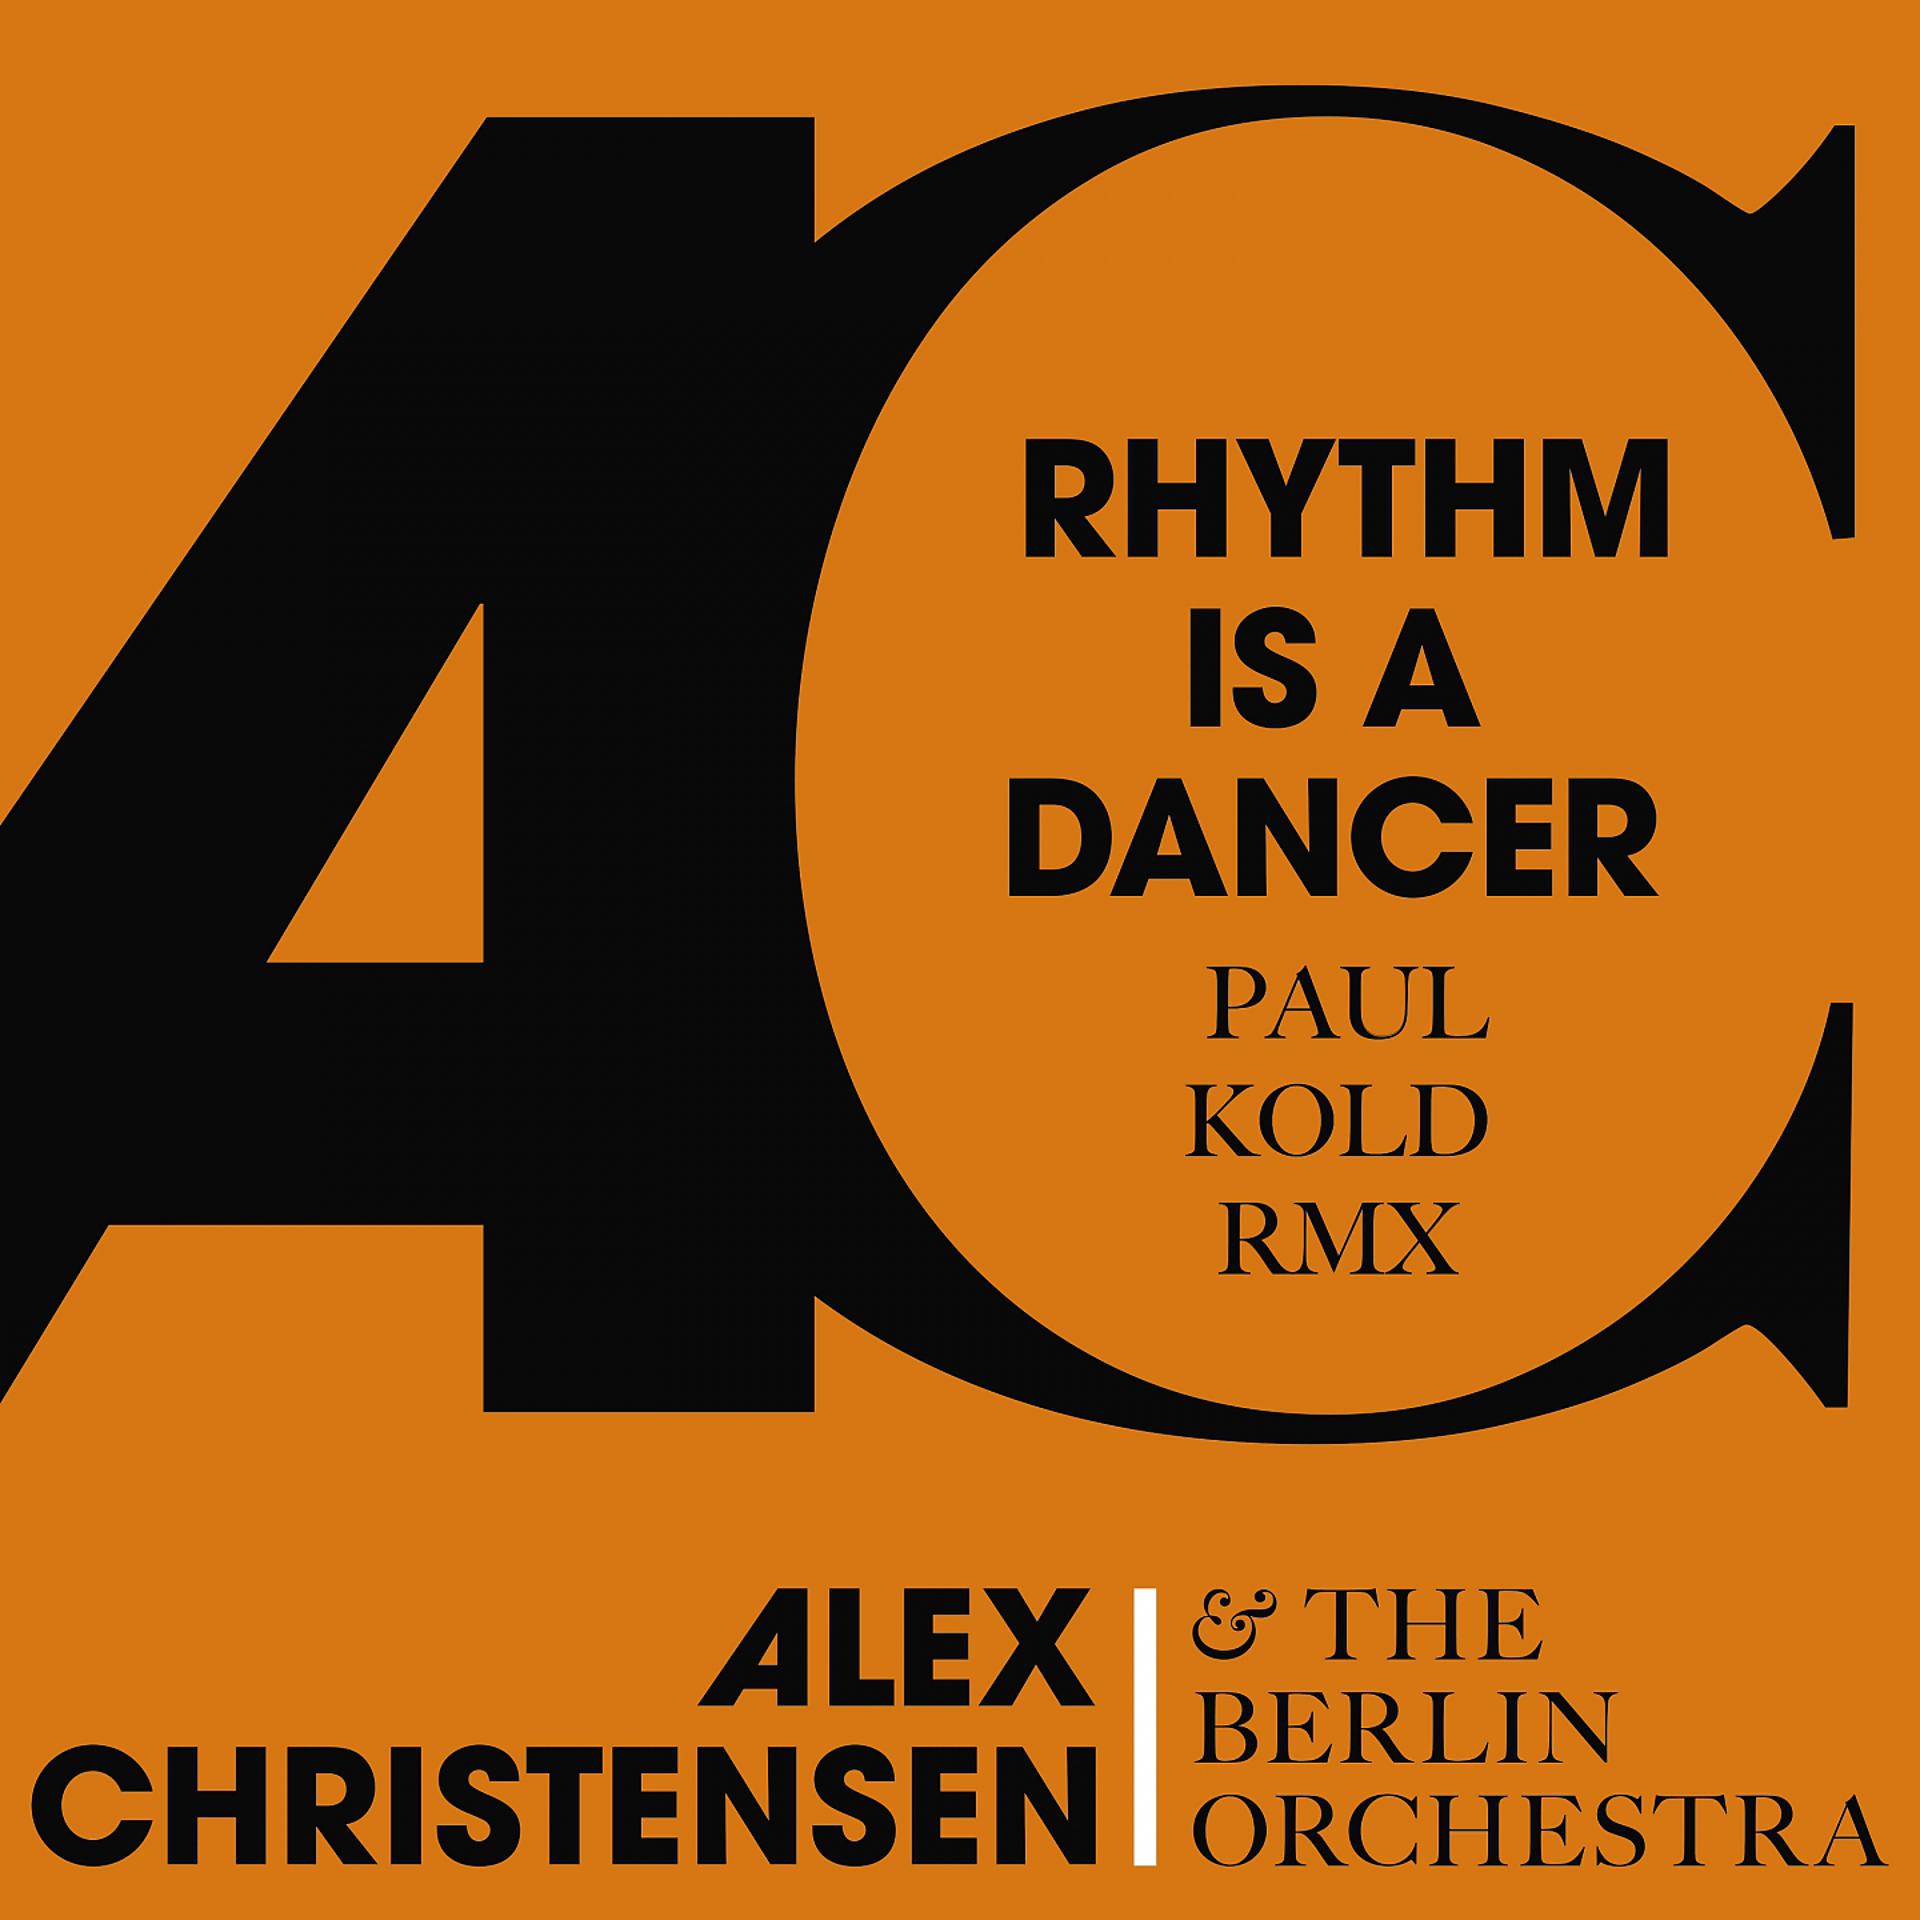 Rhythm is a dancer mp3. Alex Christensen & the Berlin Orchestra. Alex Christensen & the Berlin Orchestra - Classical 90s Dance. Rhythm is a Dancer. Alex Christensen & the Berlin Orchestra - Classical 90s Dance 2 (2018).